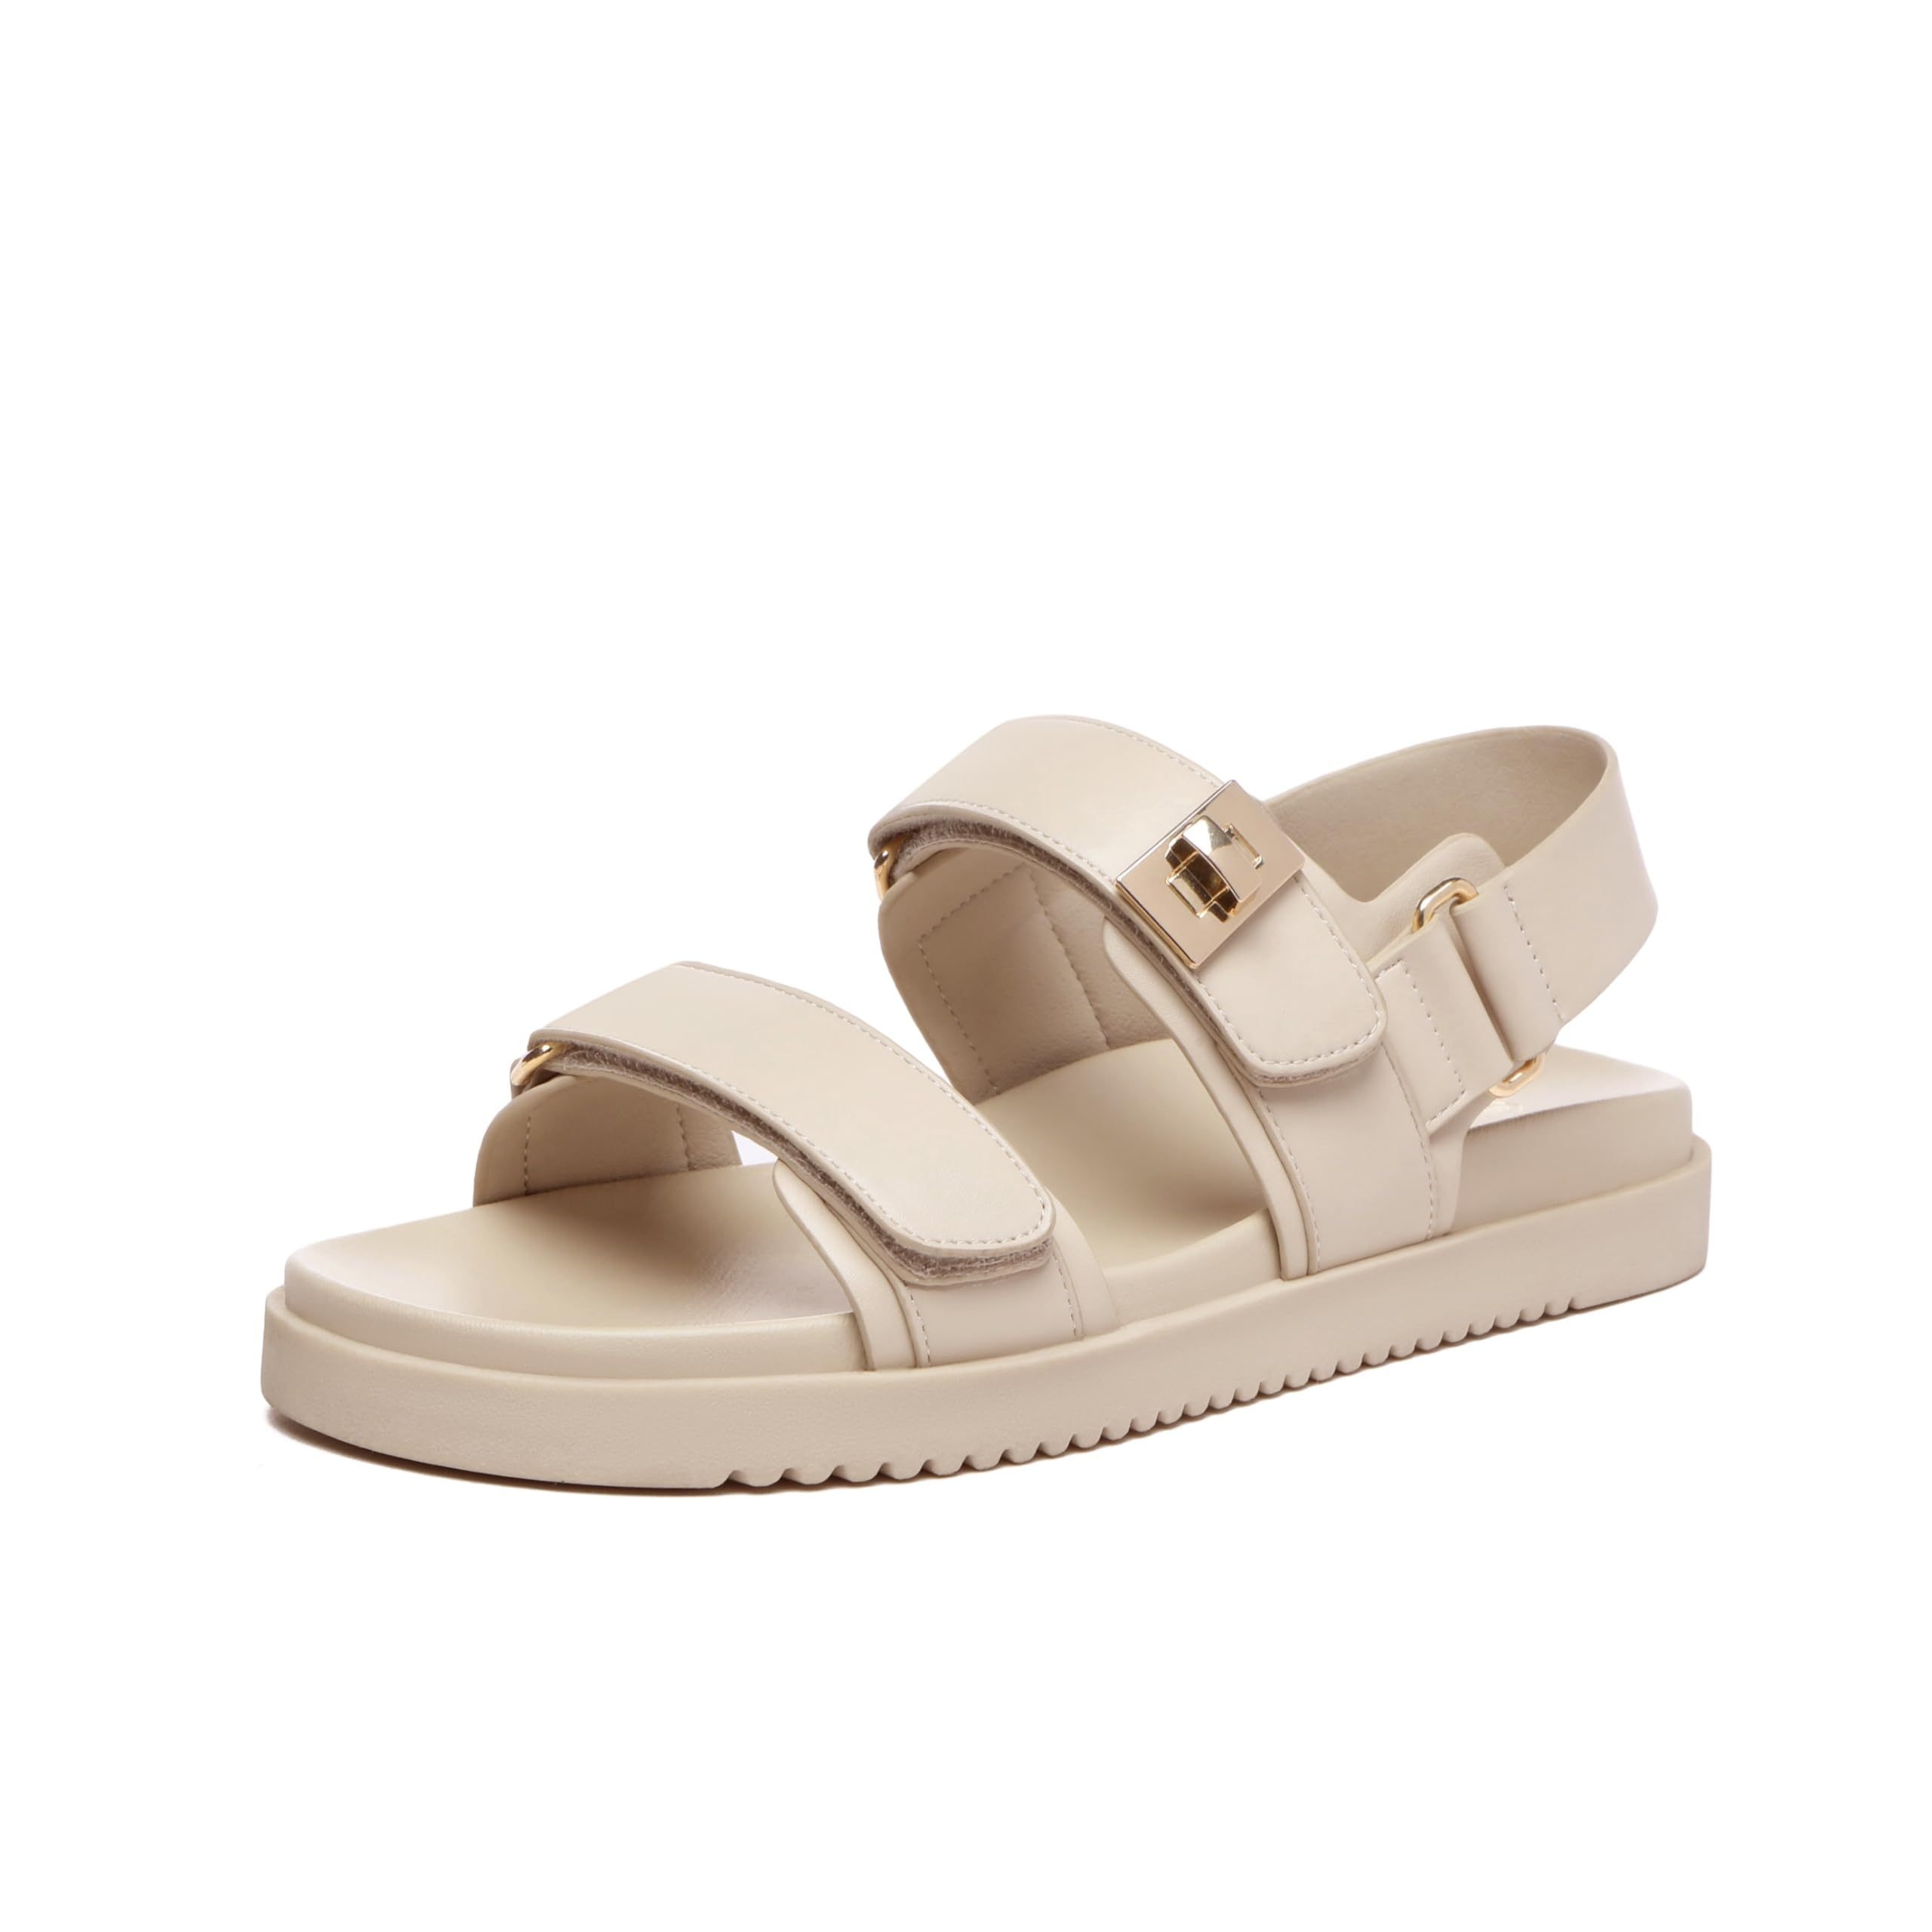 

Women's Flat Sandals, Classic Adjustable Double Strap Open Toe Summer Beach Outdoor Sandals